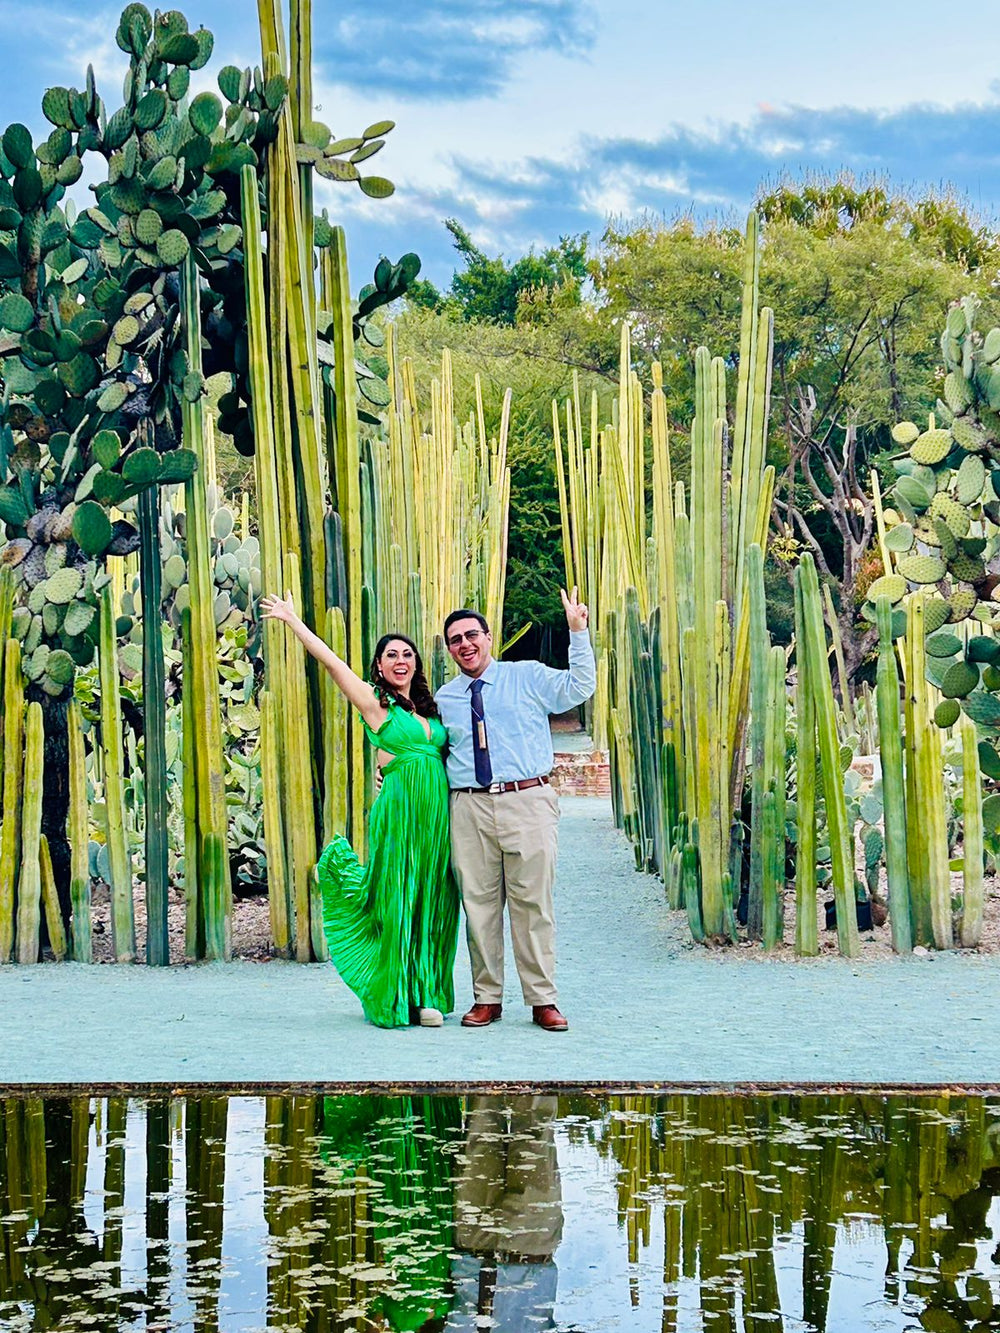 Emilia - verde - Lend the Trend renta de vestidos mexico